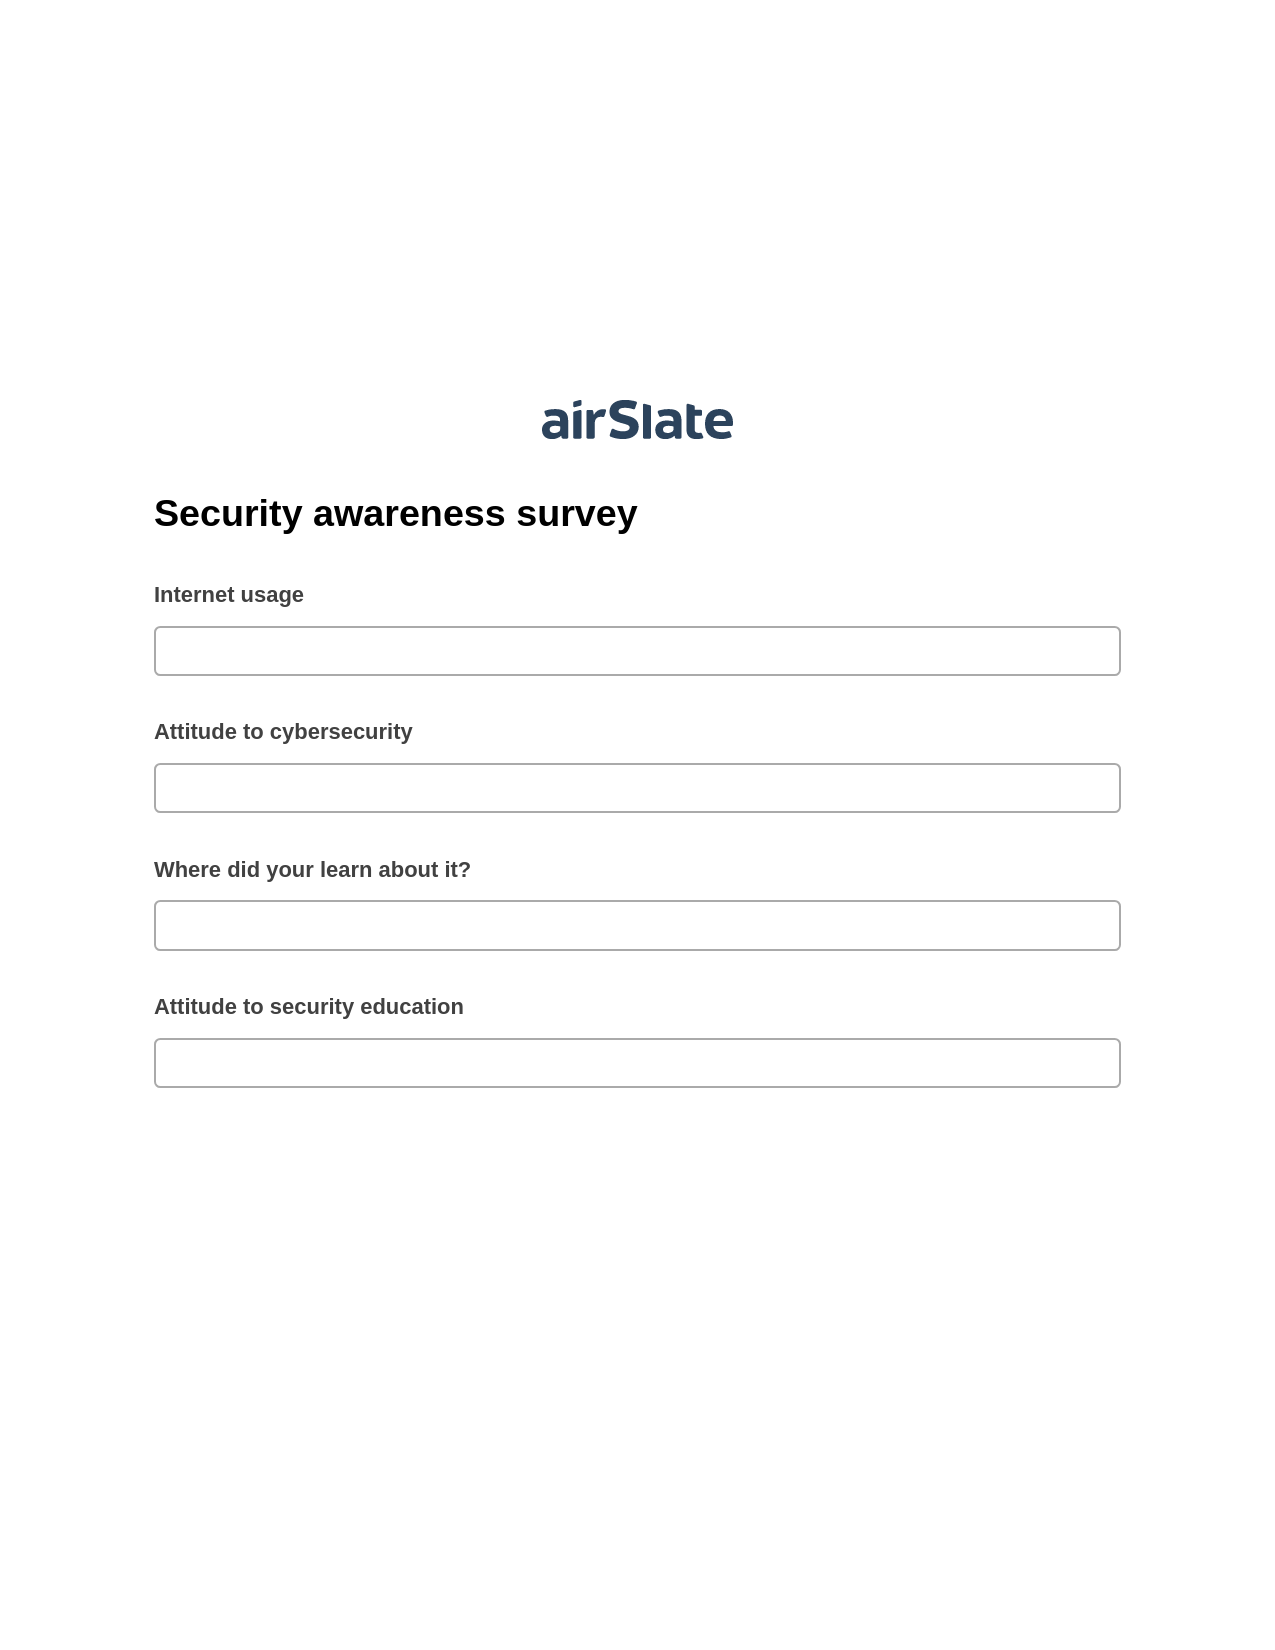 Multirole Security awareness survey Pre-fill from Salesforce Records with SOQL Bot, Google Calendar Bot, Webhook Postfinish Bot